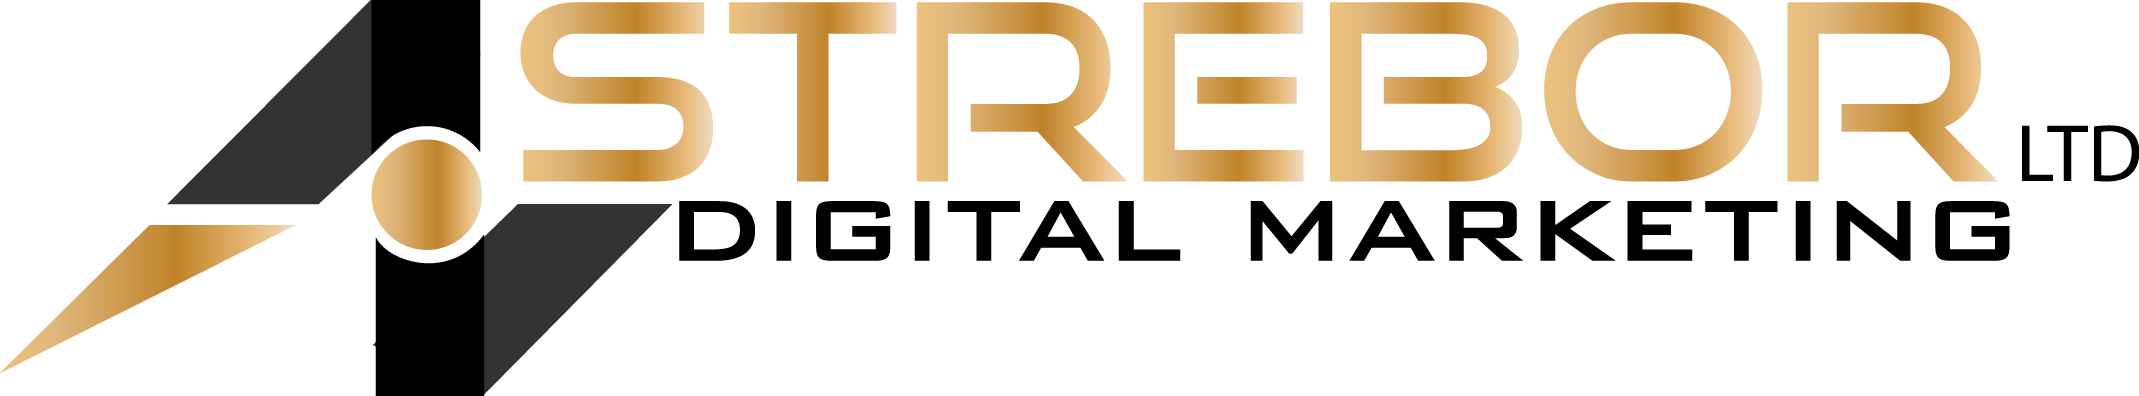 Strebpr Digital Marketing Logo